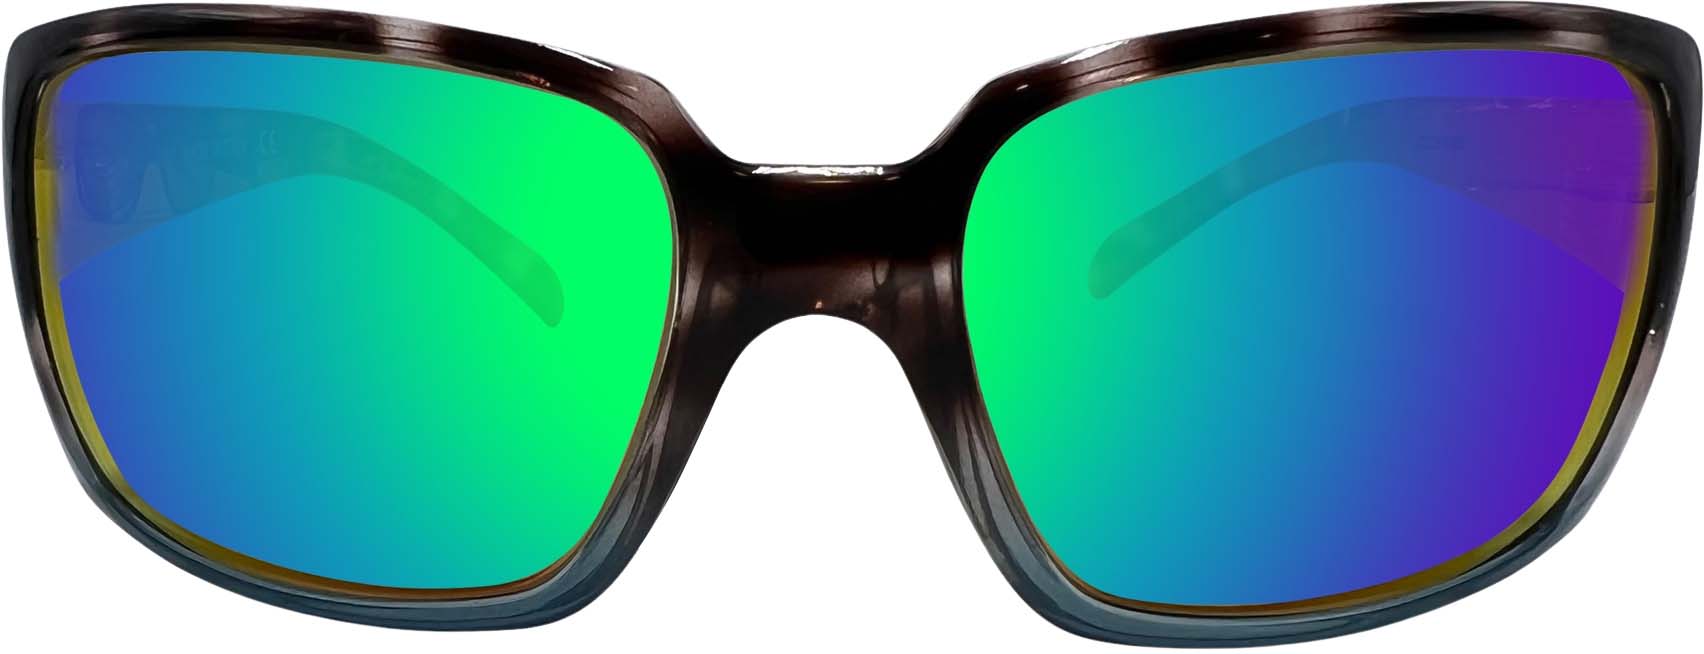 RLVNT Athena Series Sunglasses